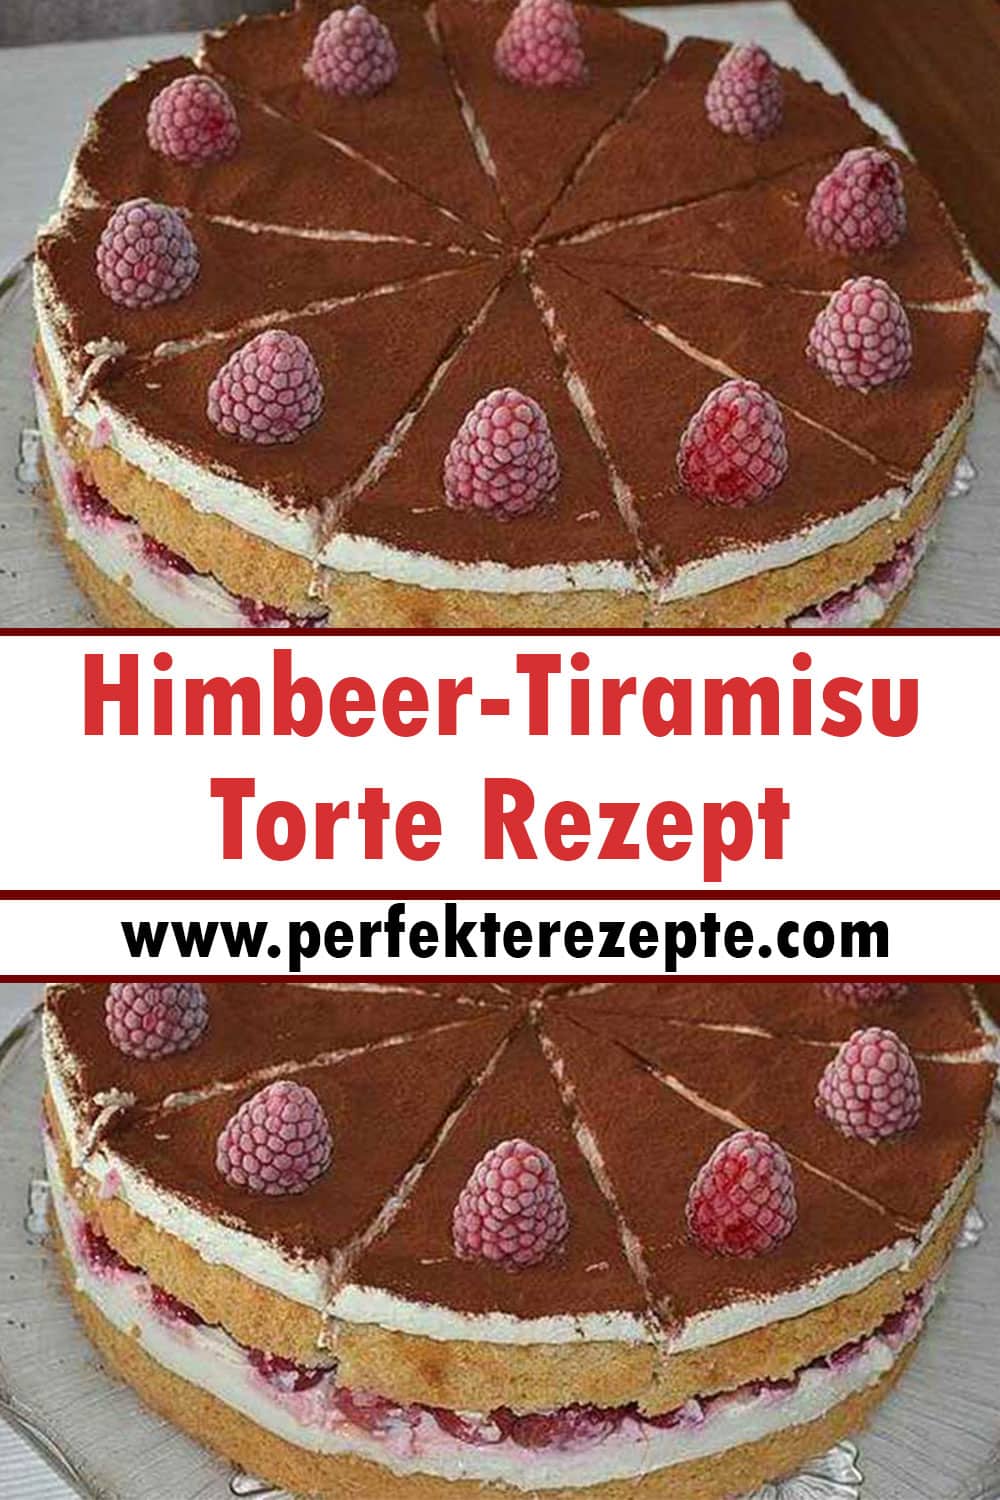 Himbeer-Tiramisu-Torte Rezept